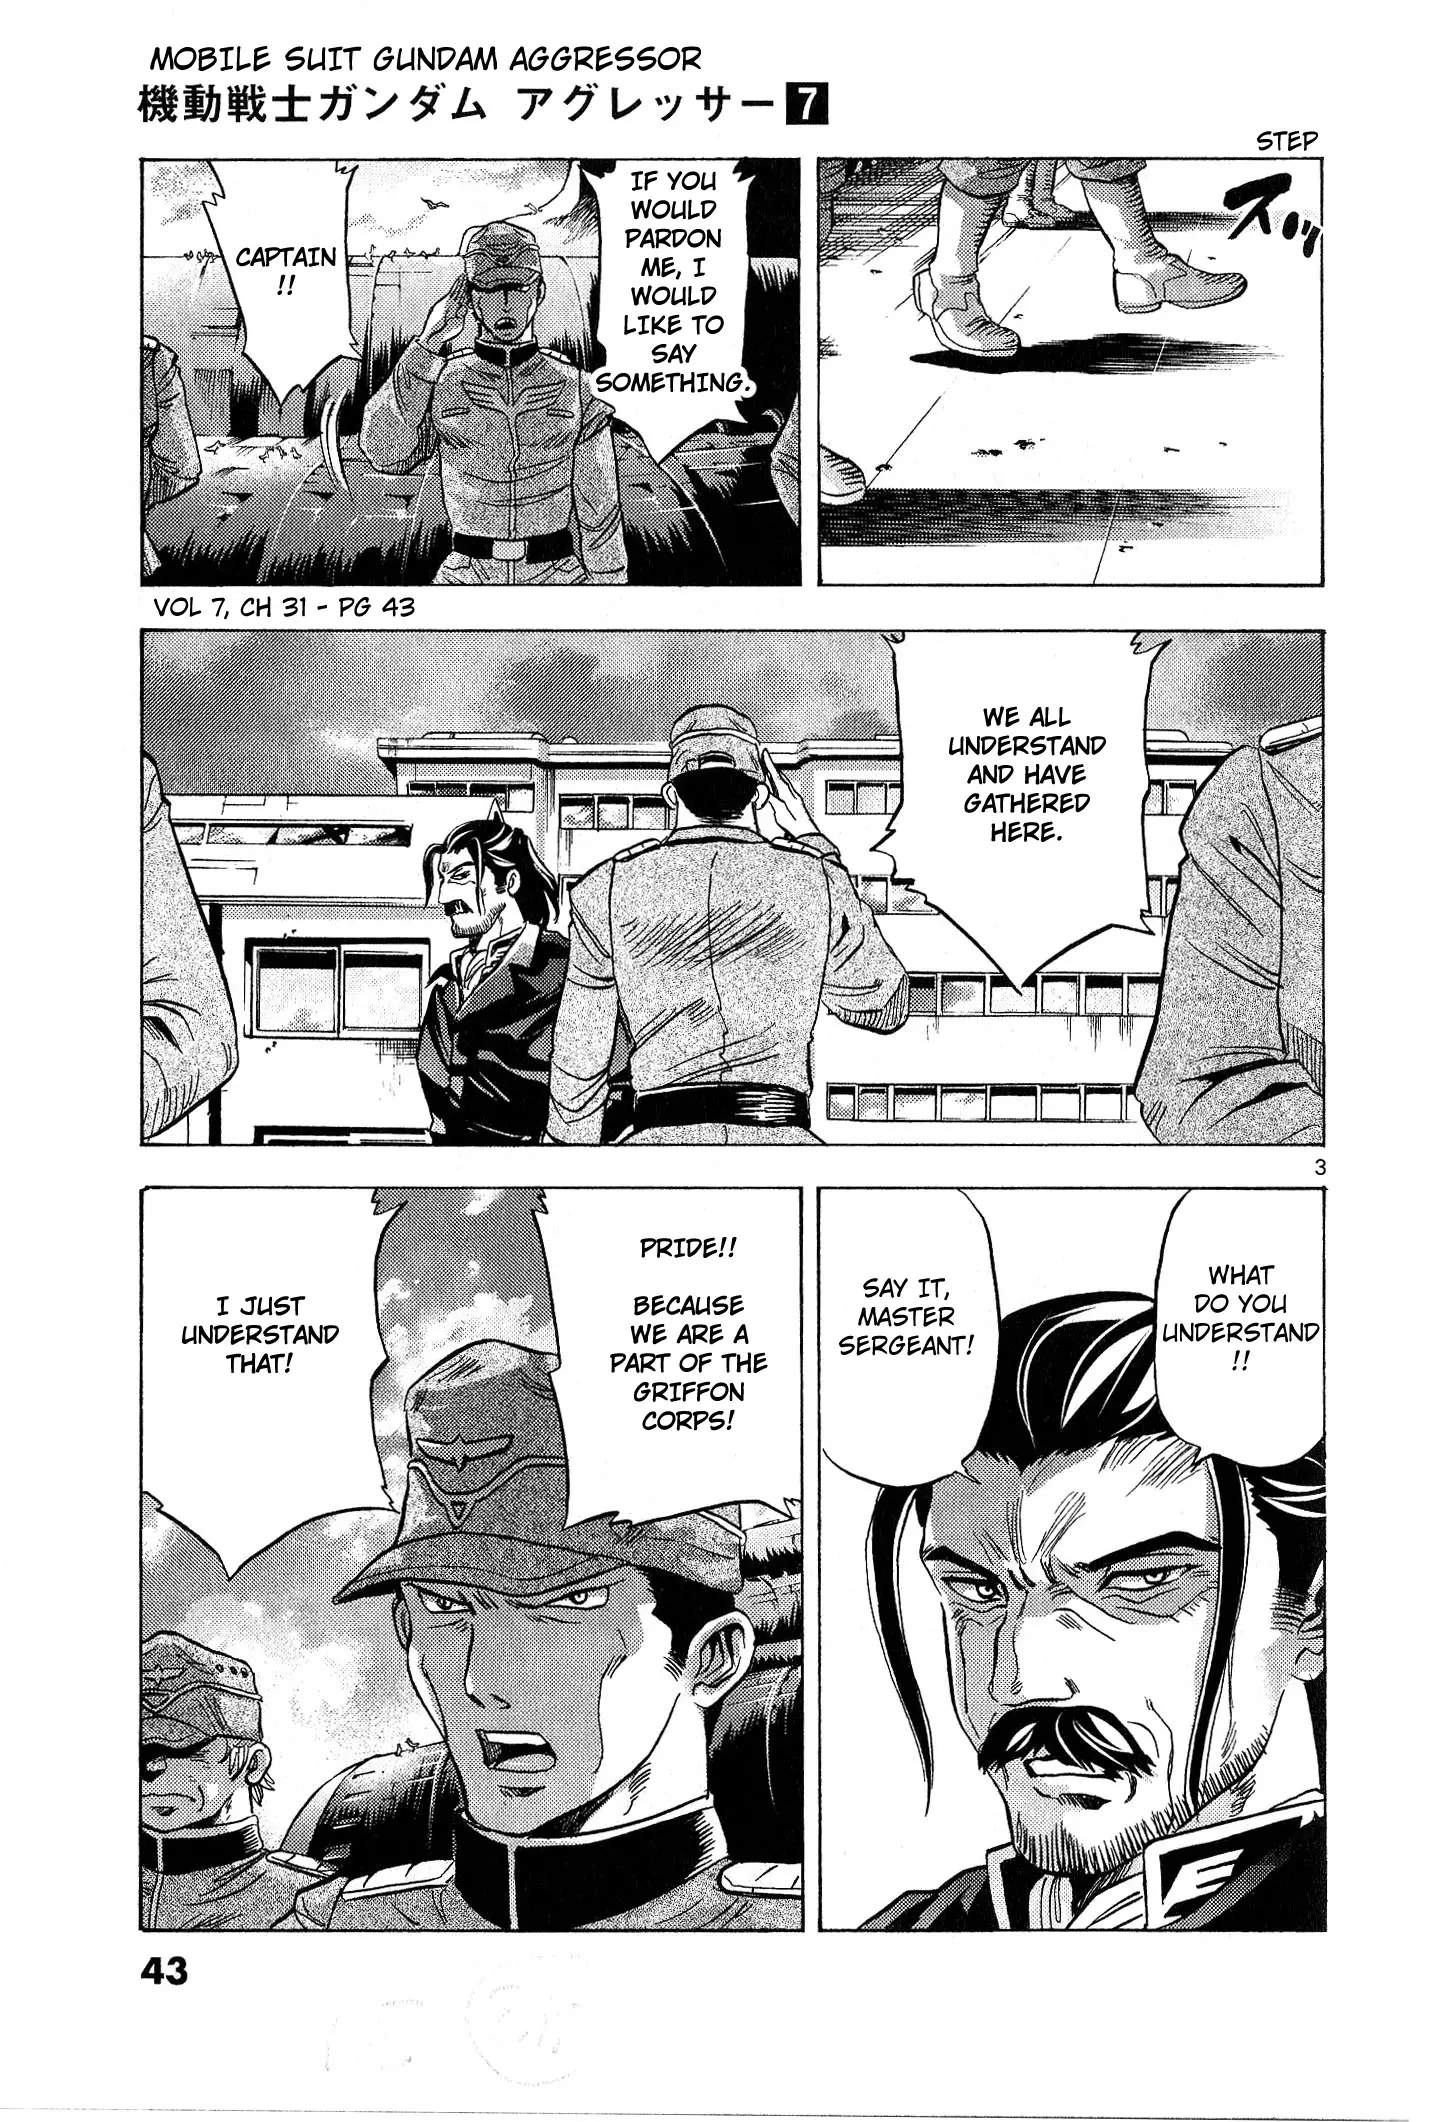 Mobile Suit Gundam Aggressor - 31 page 3-8d3948f5